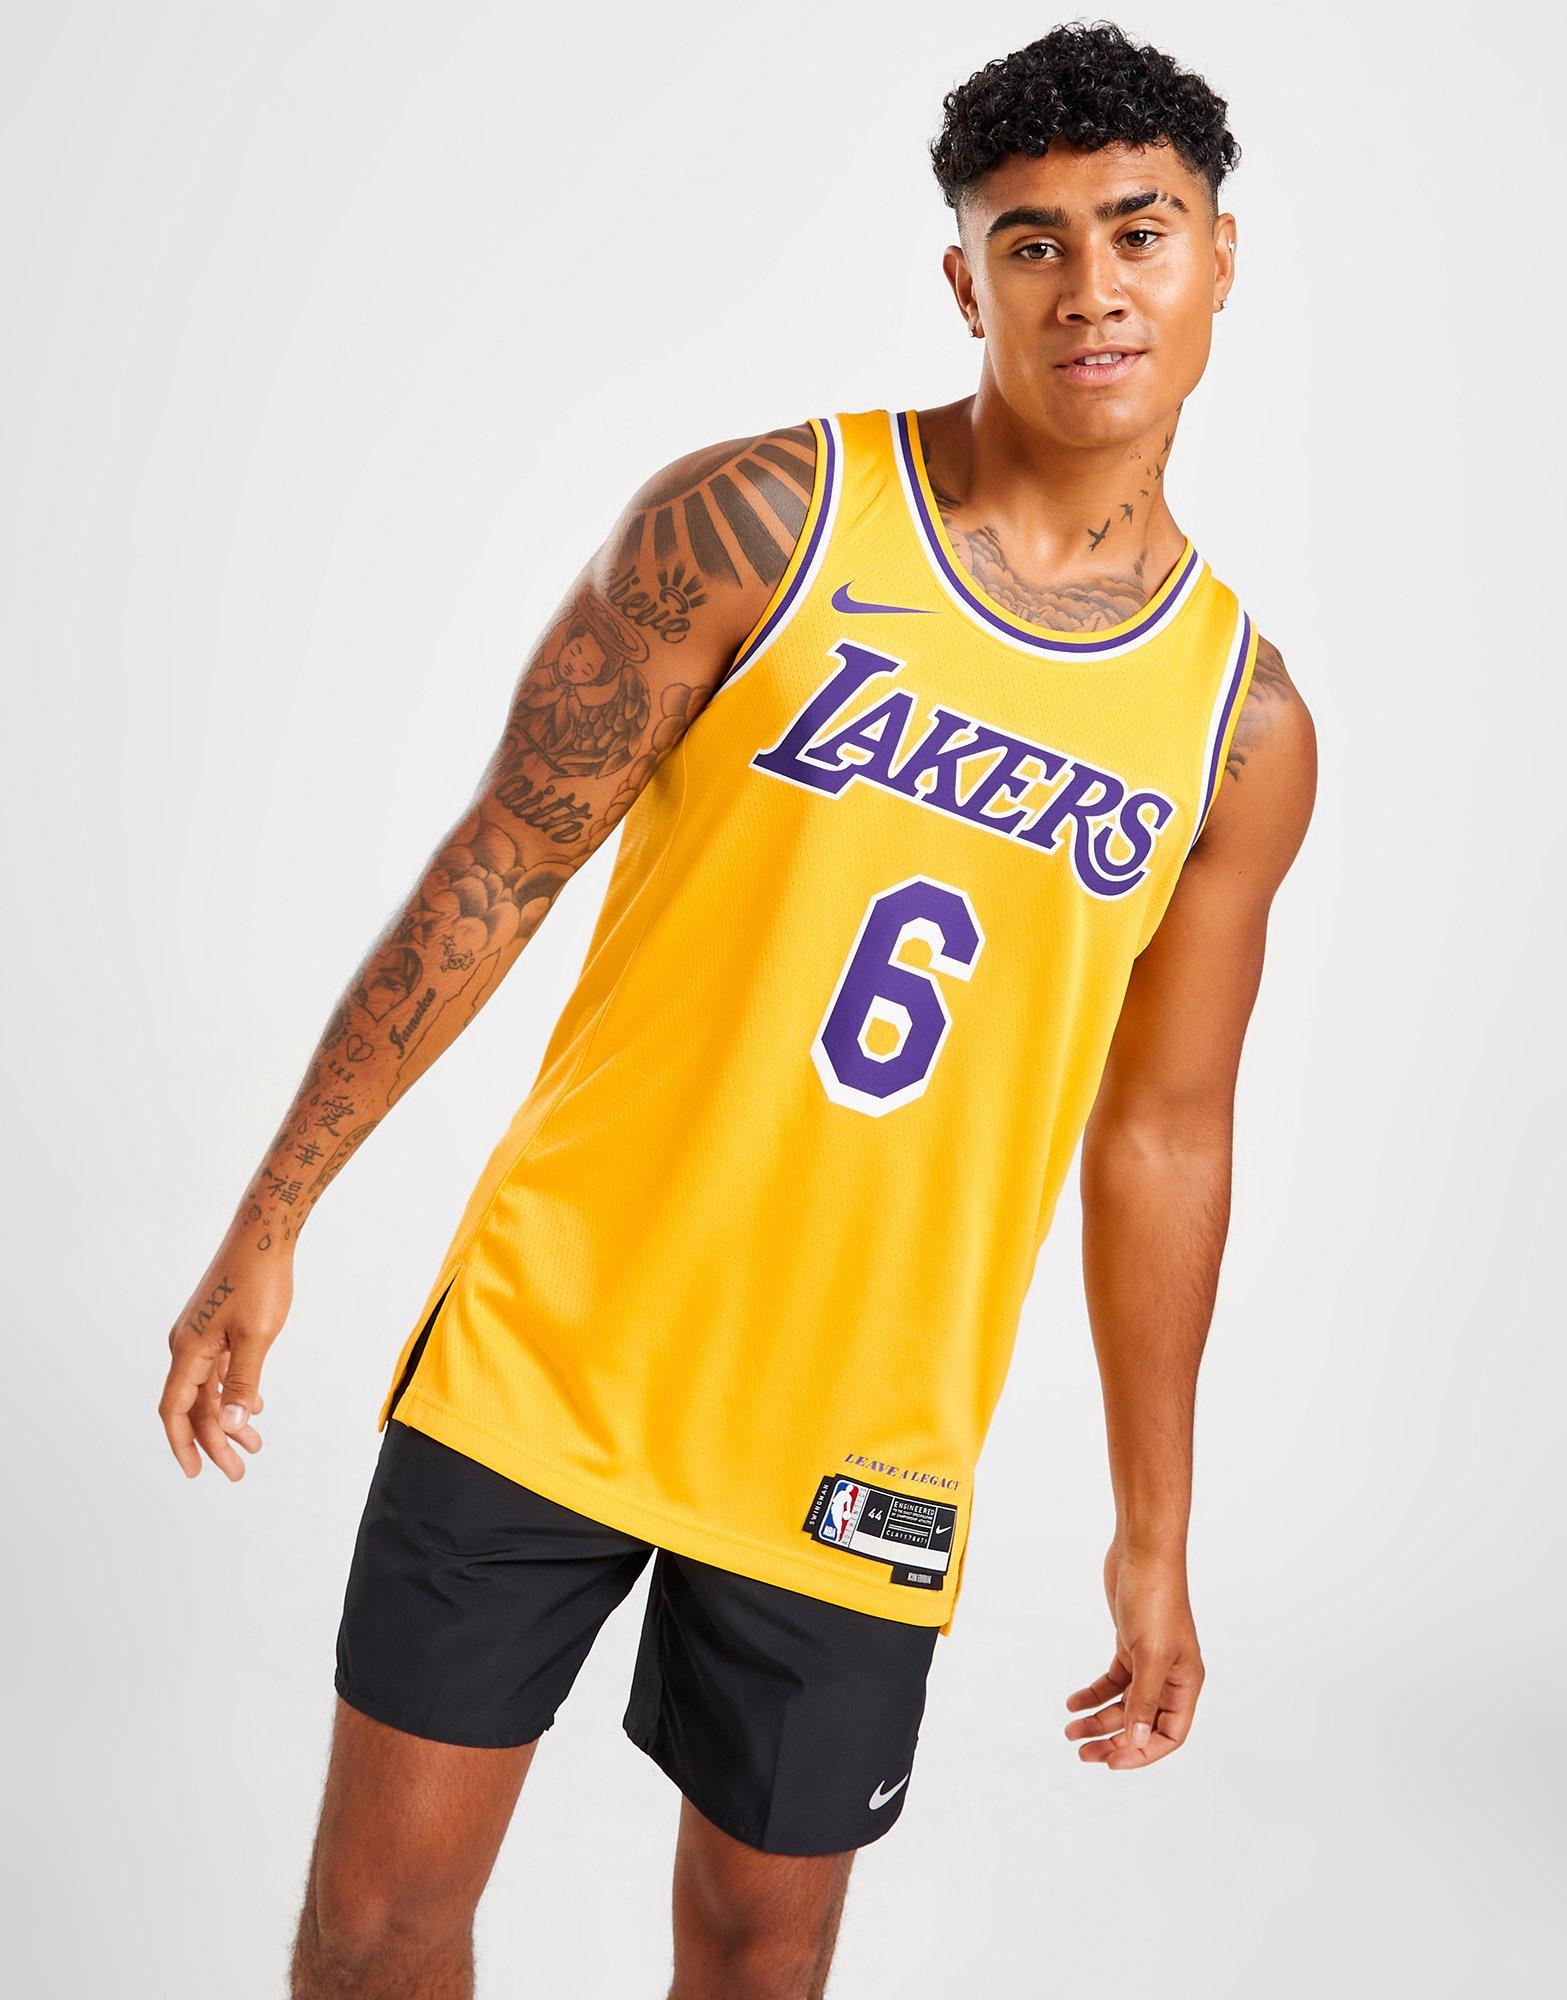 Los Angeles LA Lakers 18-19 Replica Yellow Jersey XL Wish Jersey Promo